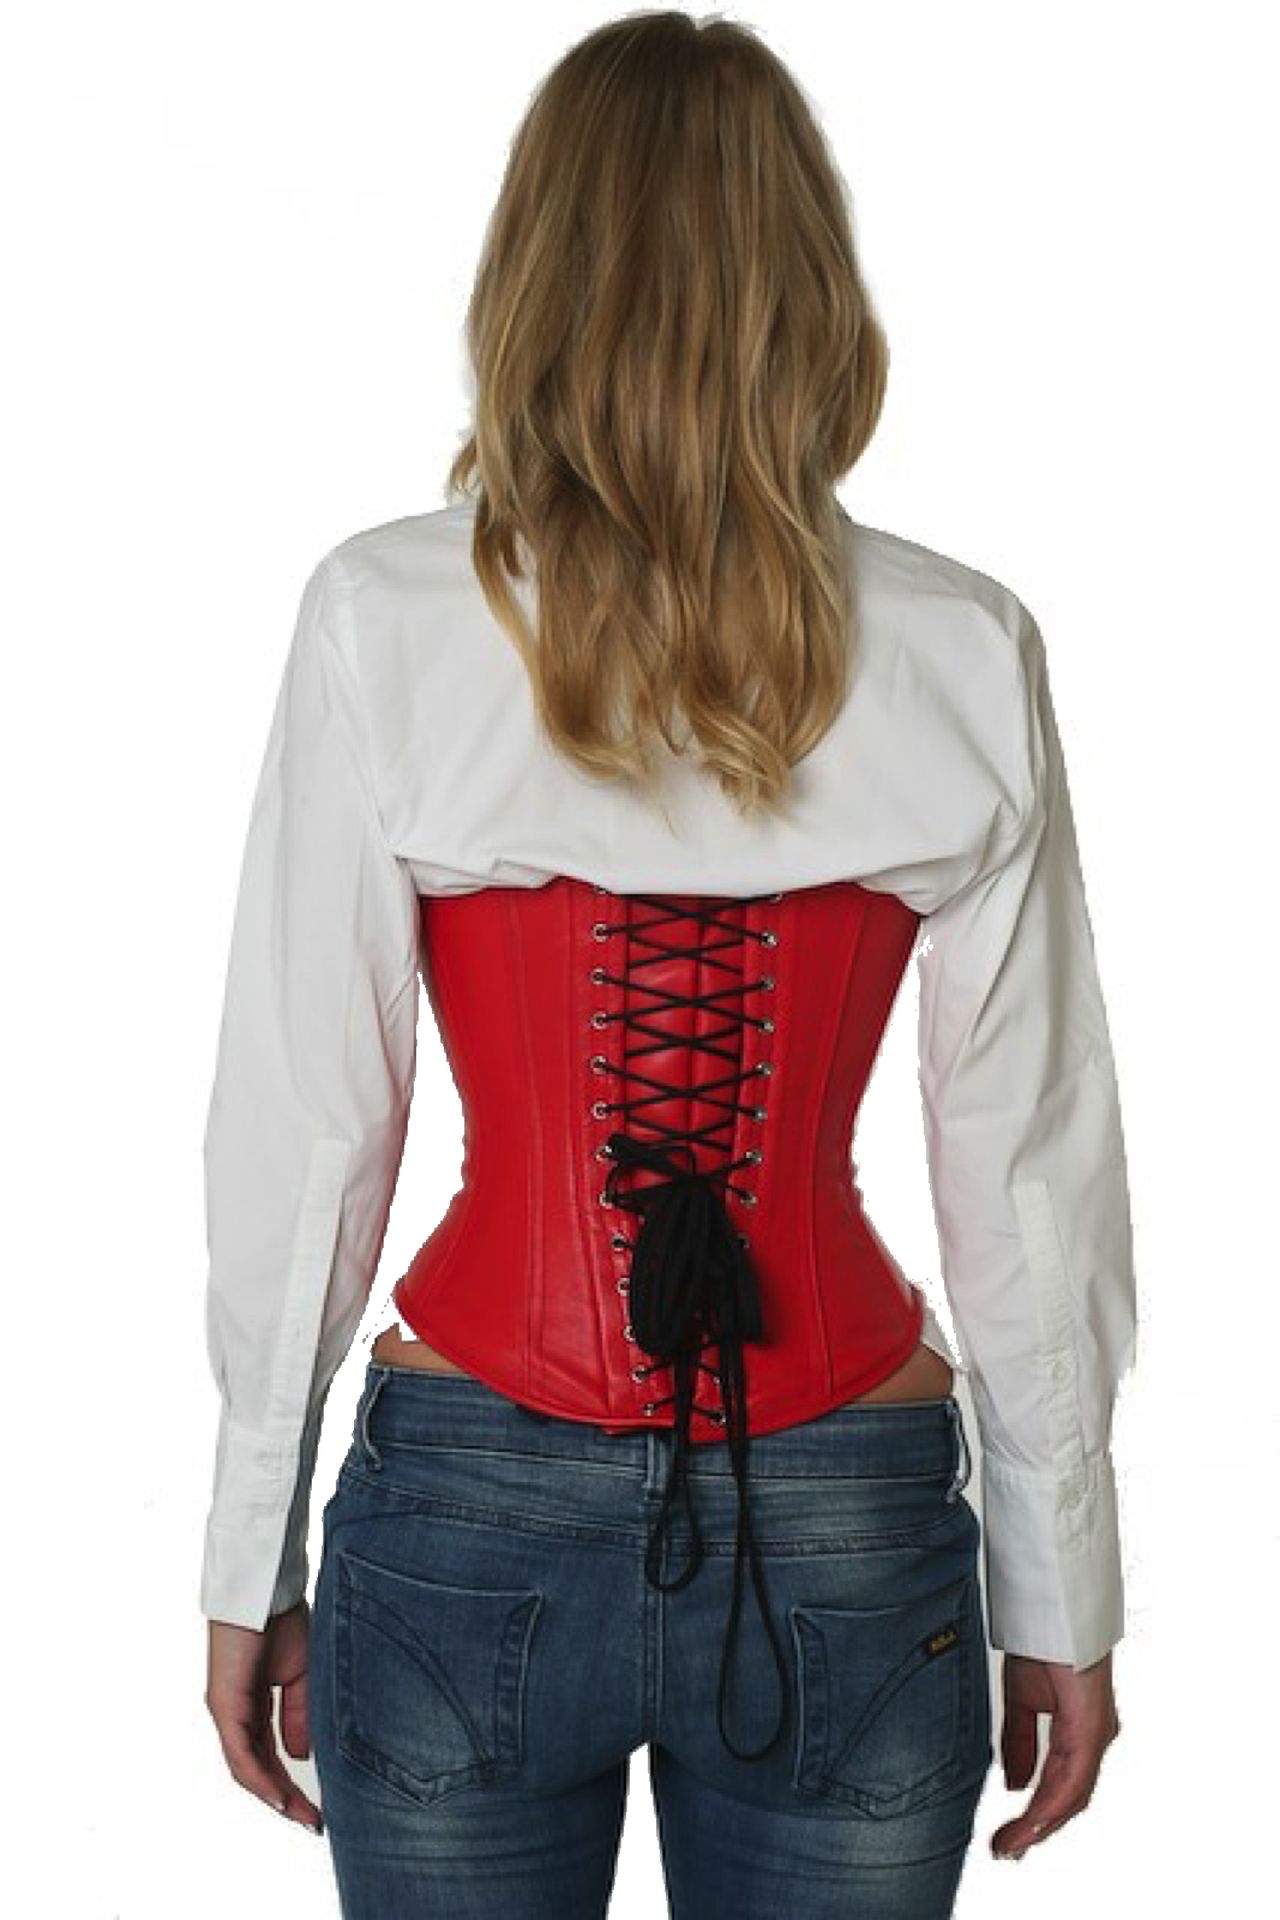 Corse rojo cuero bajo pecho corset lu23